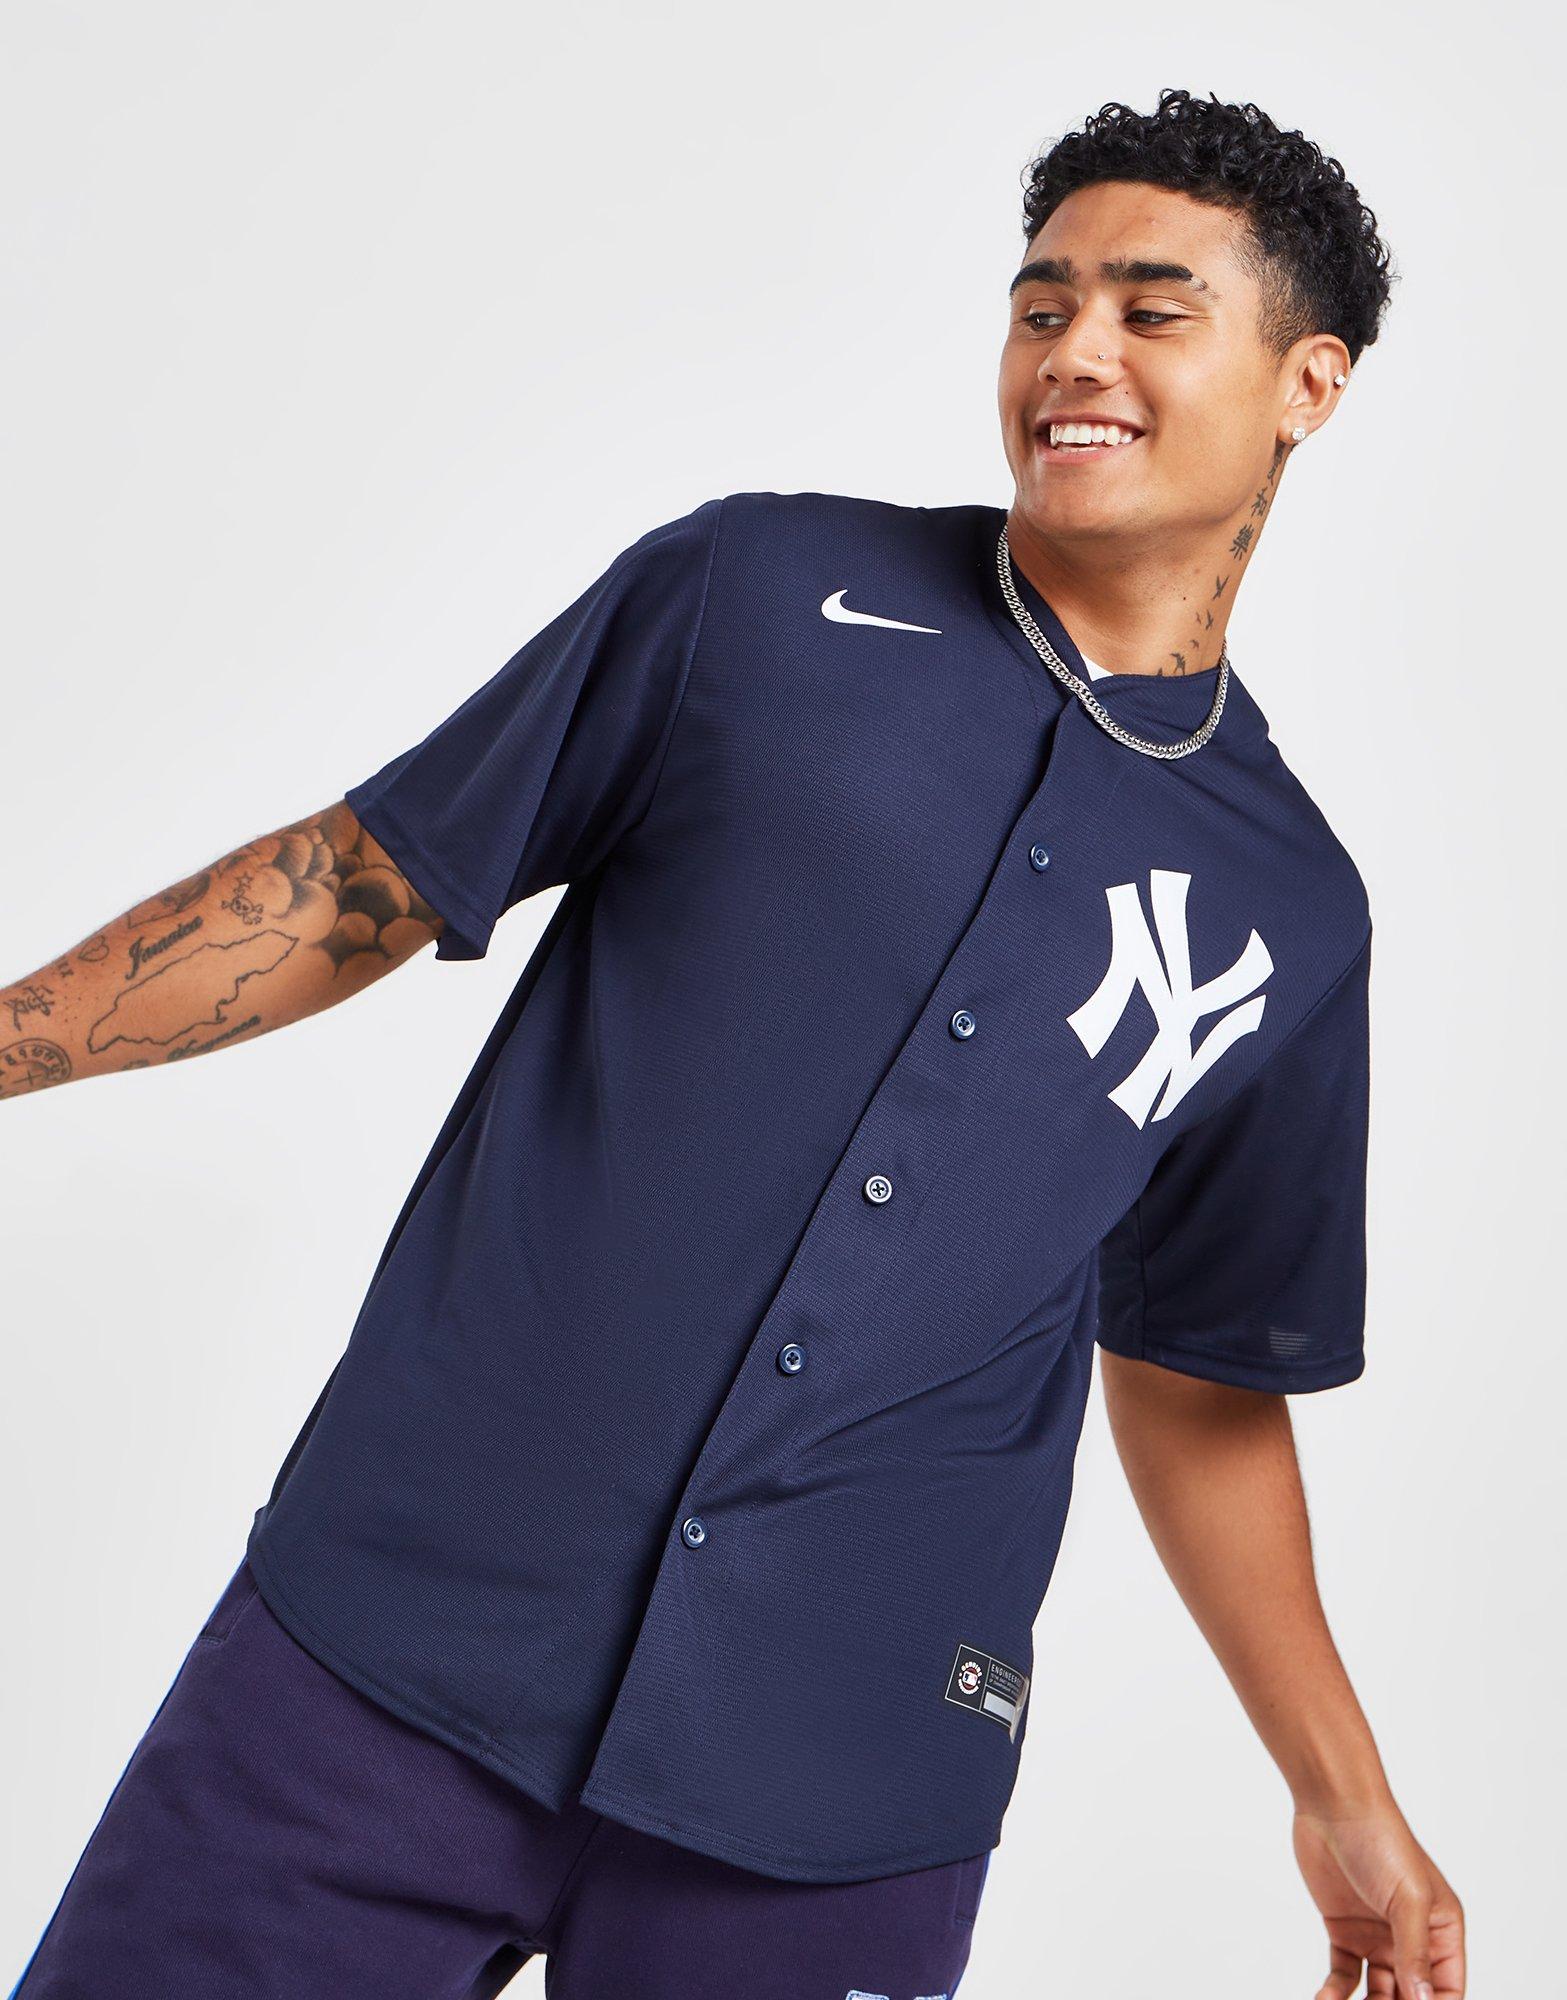 Toddler Nike Navy New York Yankees Alternate Replica Team Jersey